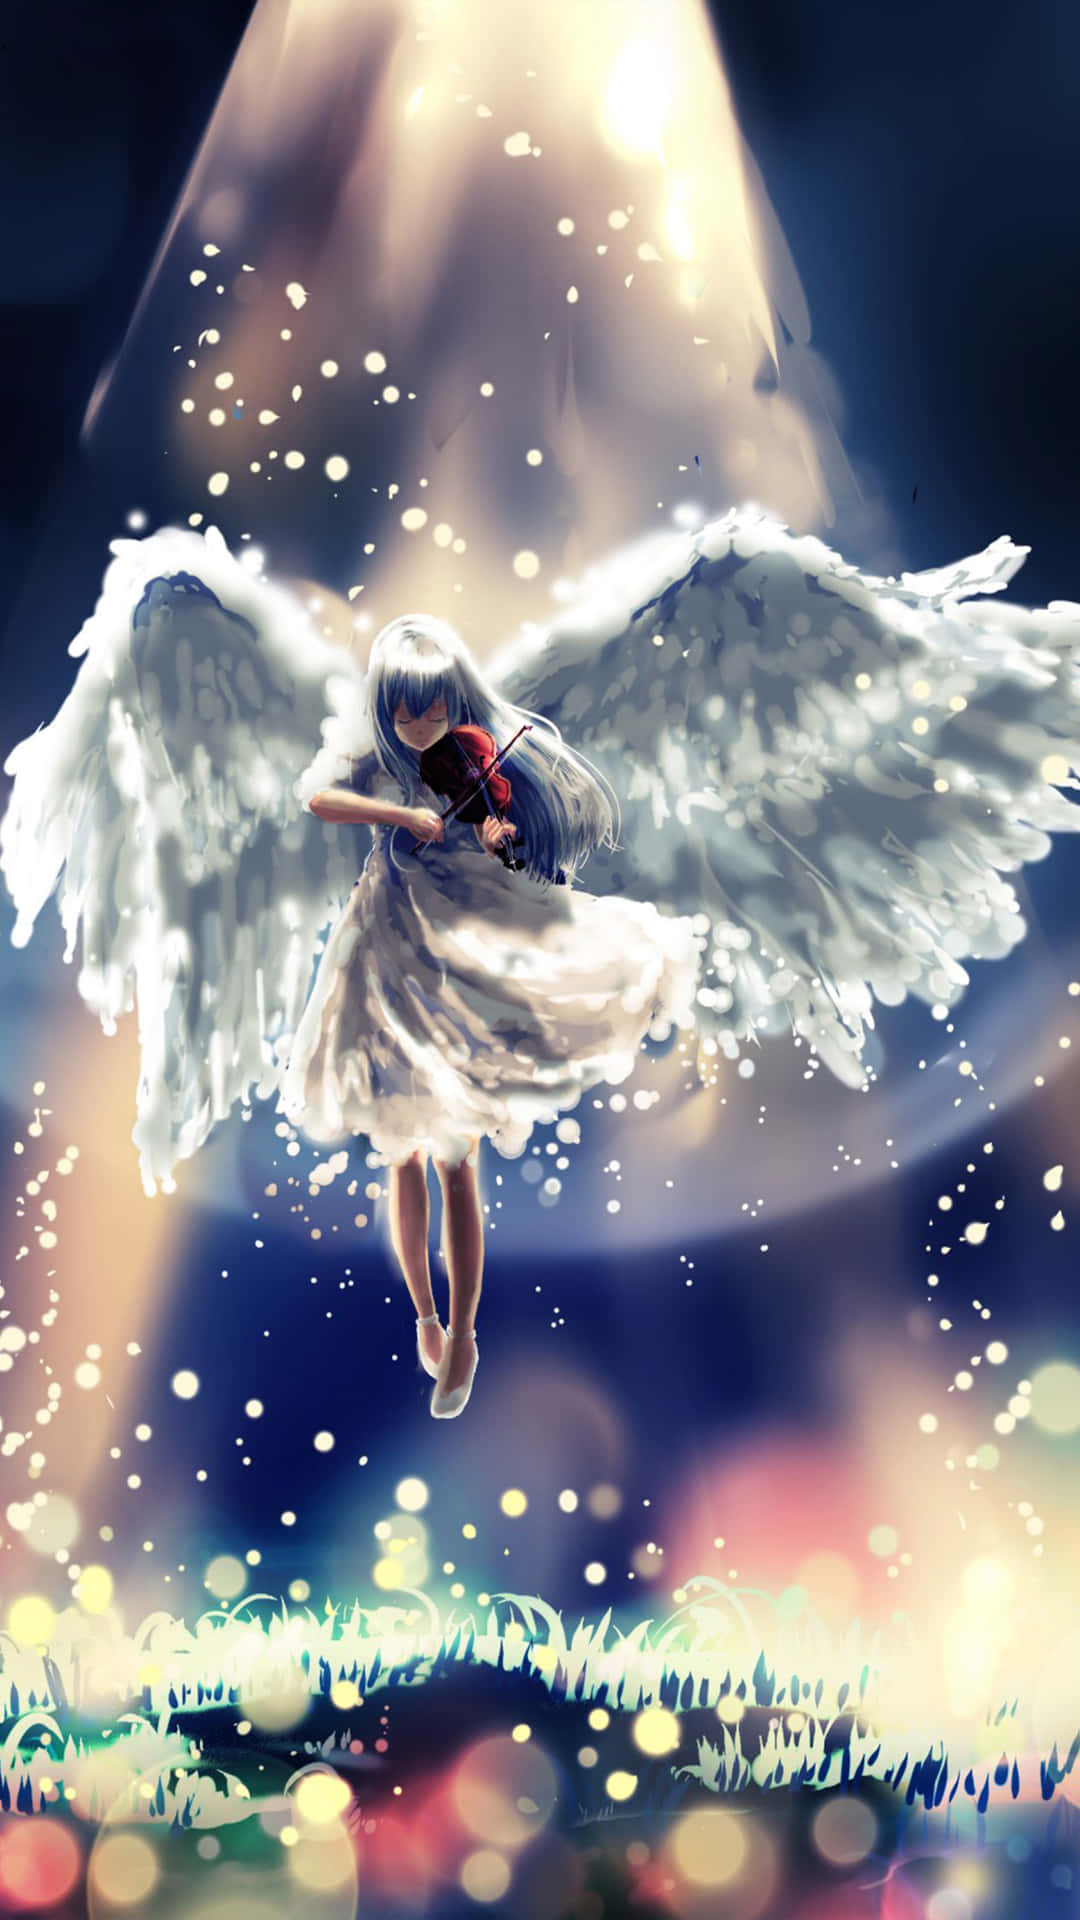 Serene Angelic Figure in stunning light Wallpaper